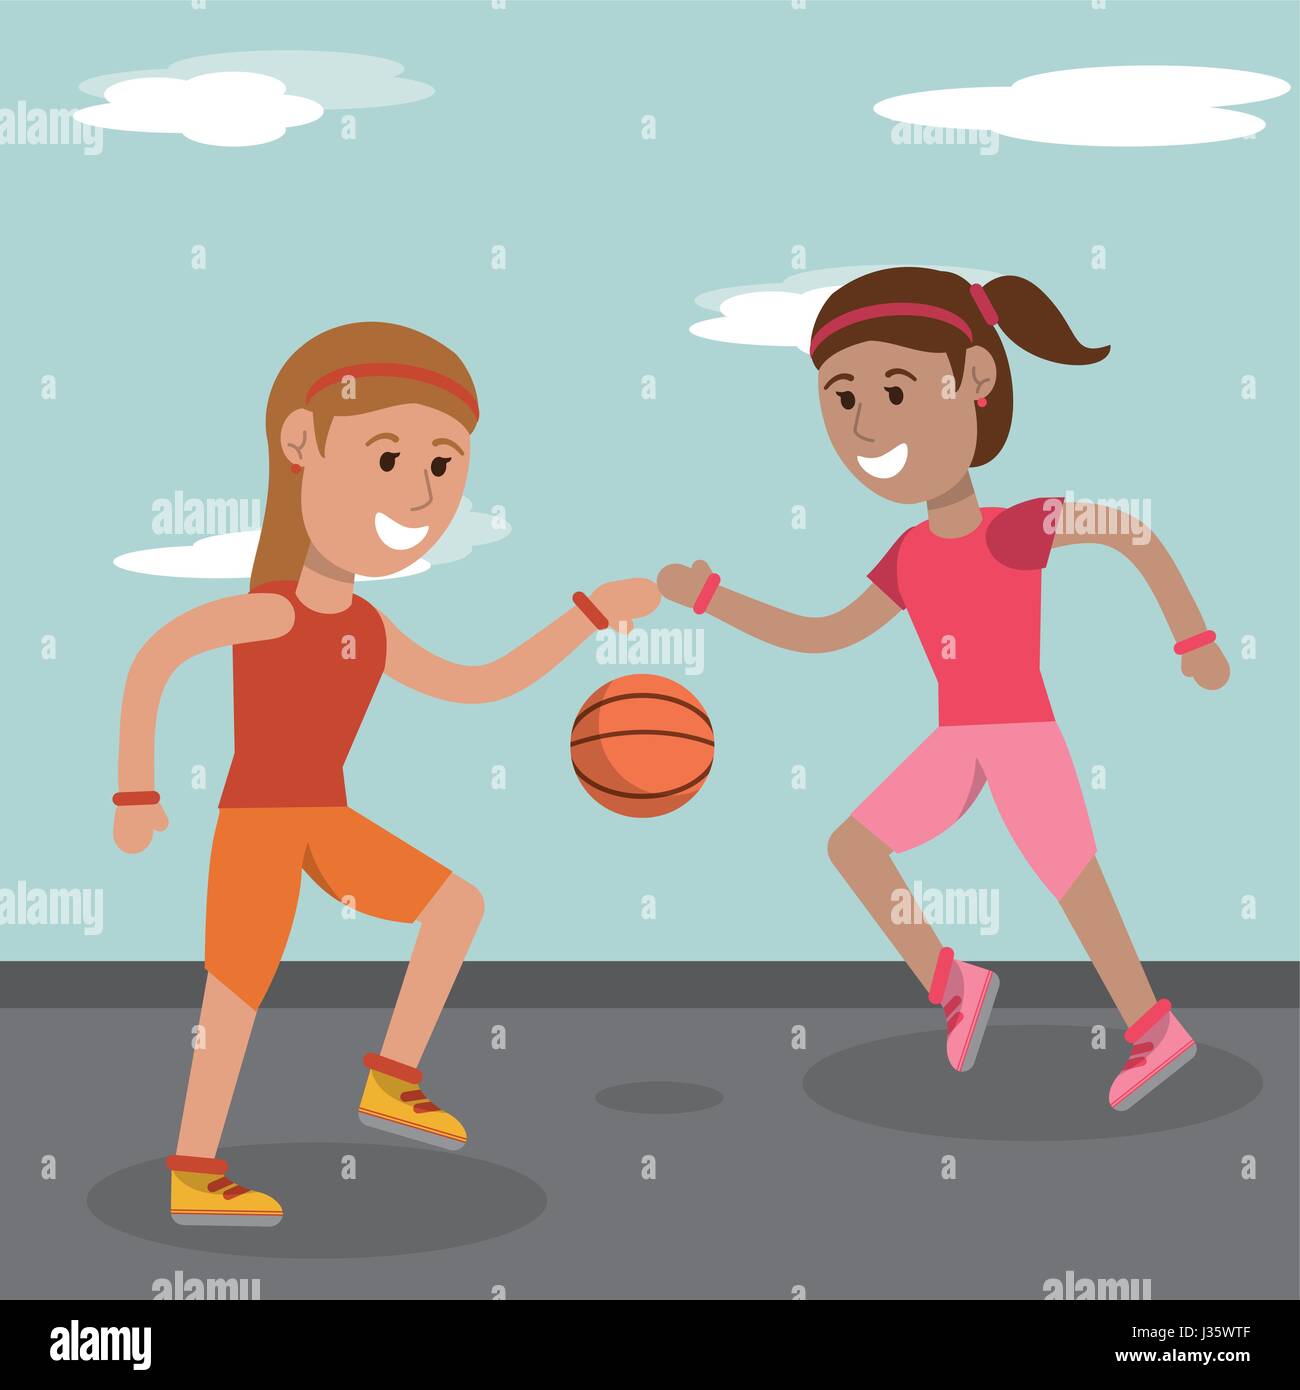 cartoon girls playing basketball sport image Stock Vector